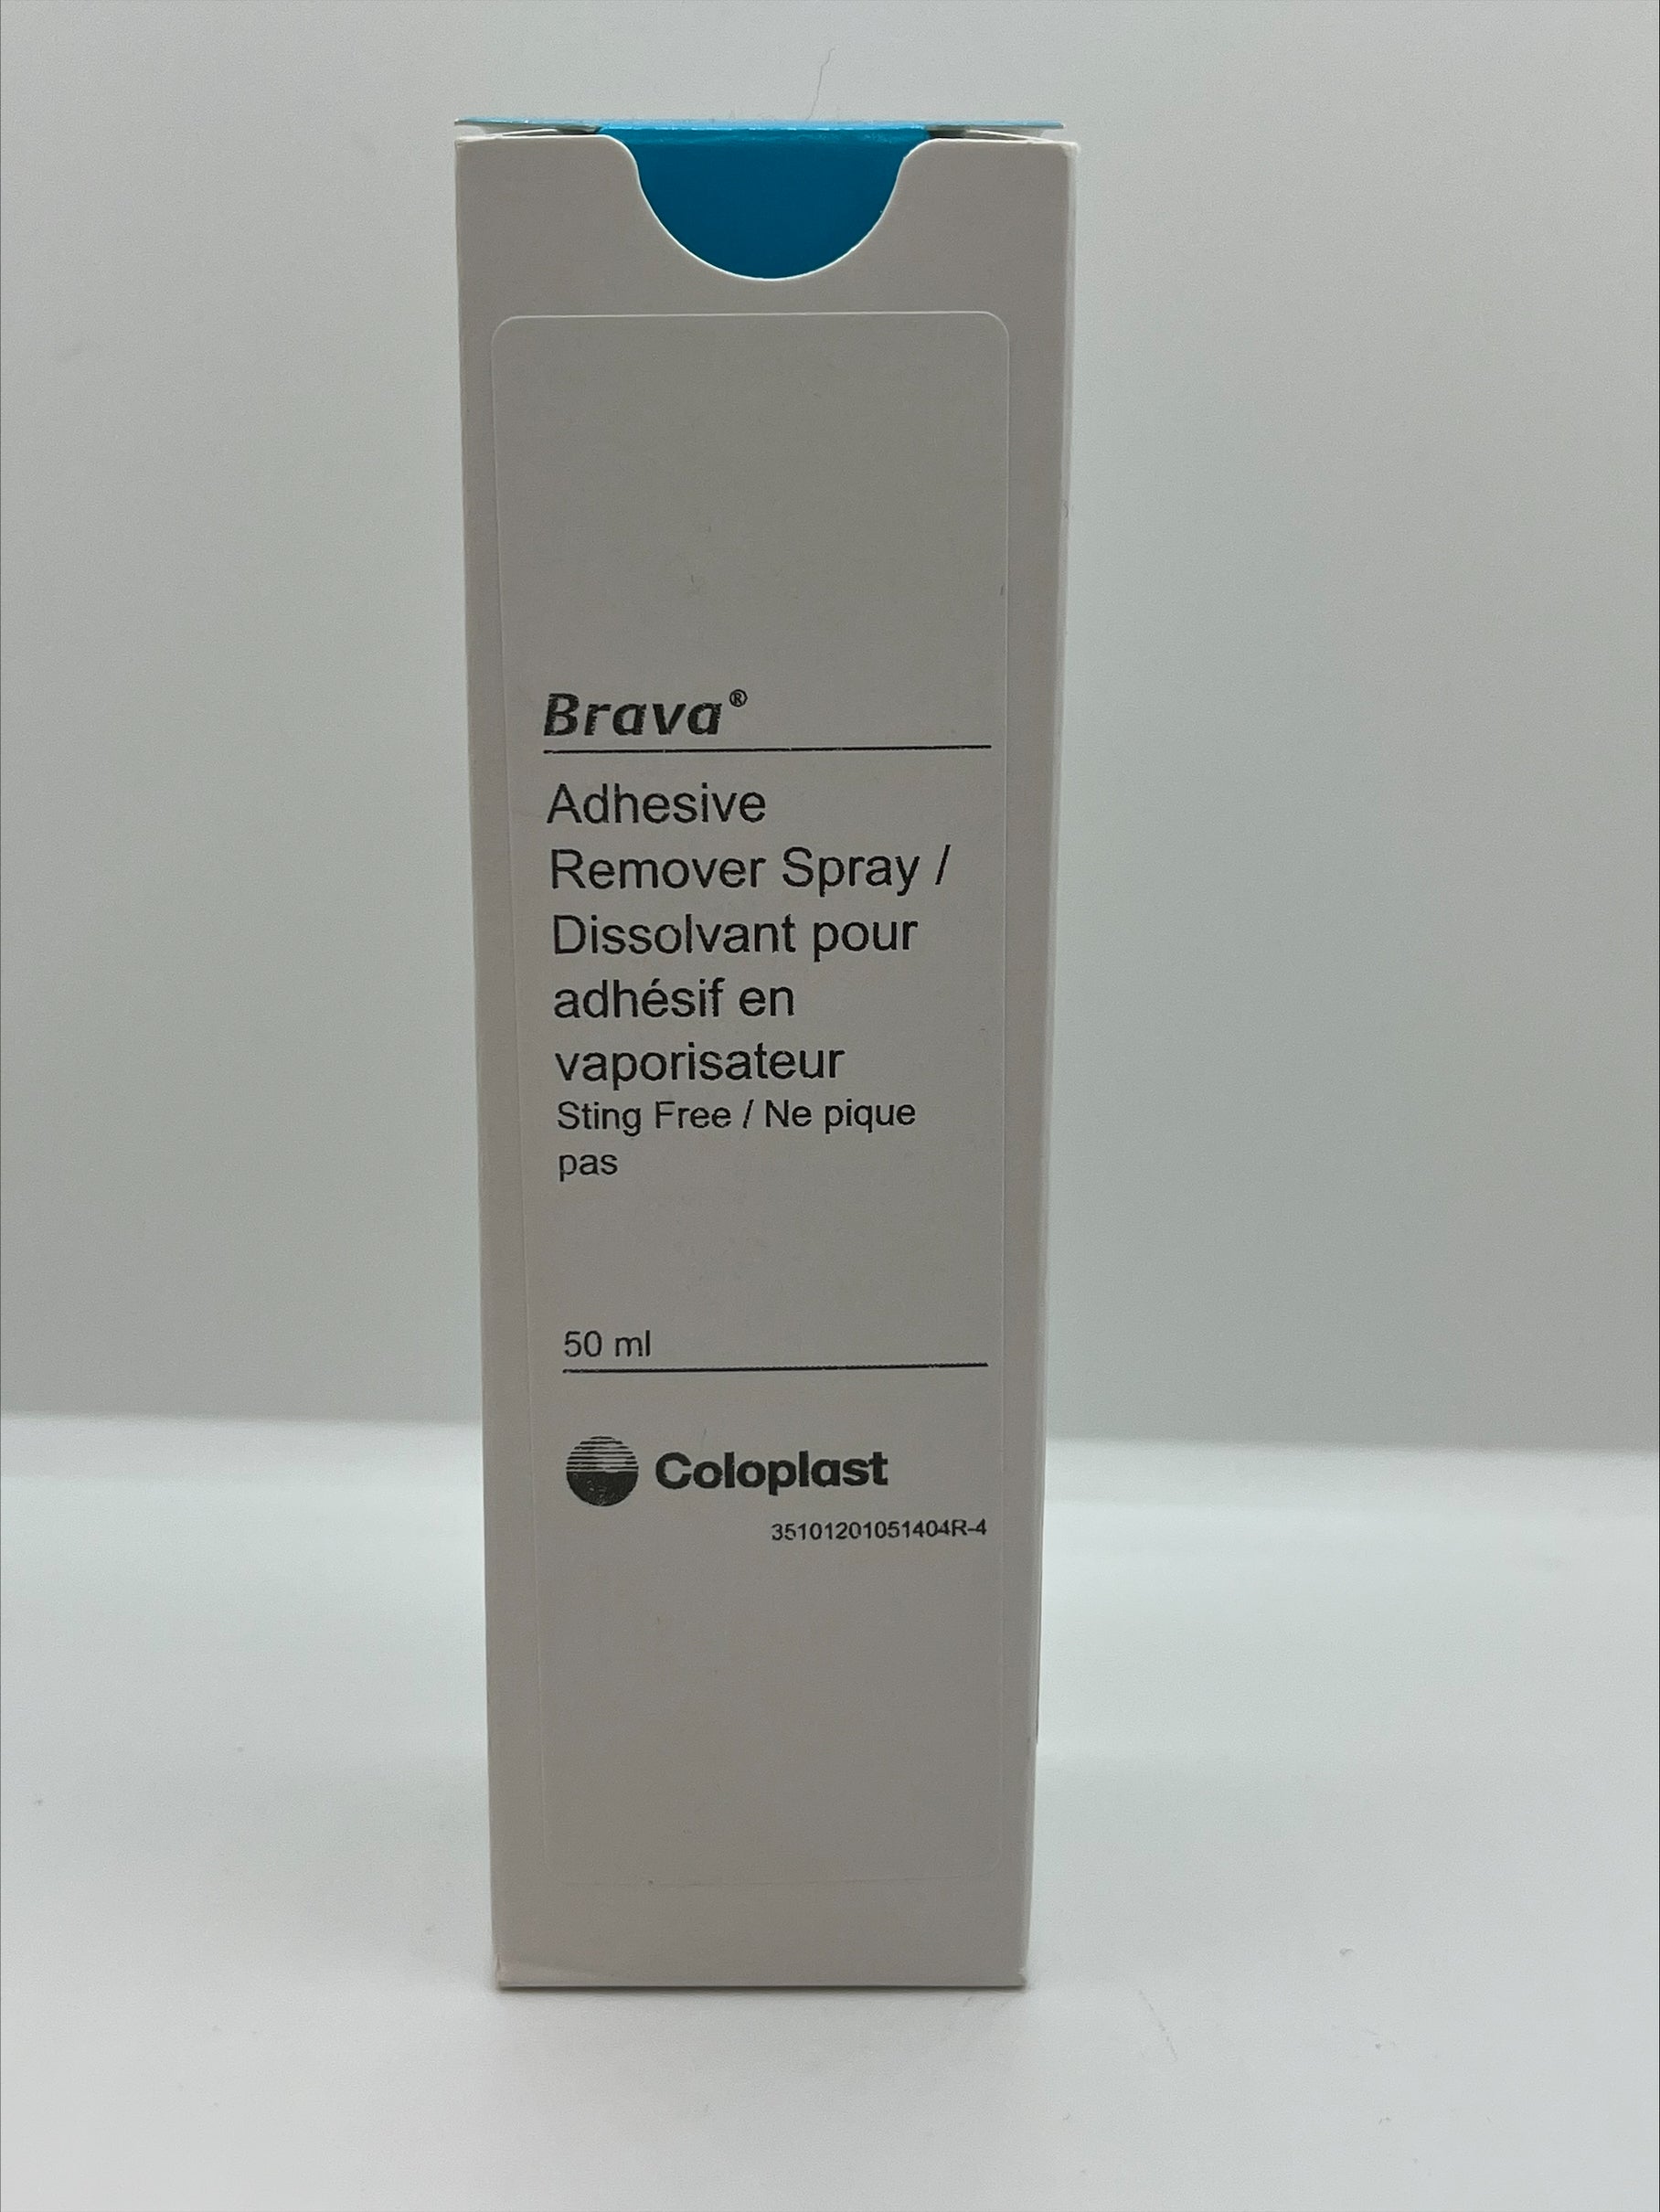 Brava Adhesive Remover Spray 50ml (1)